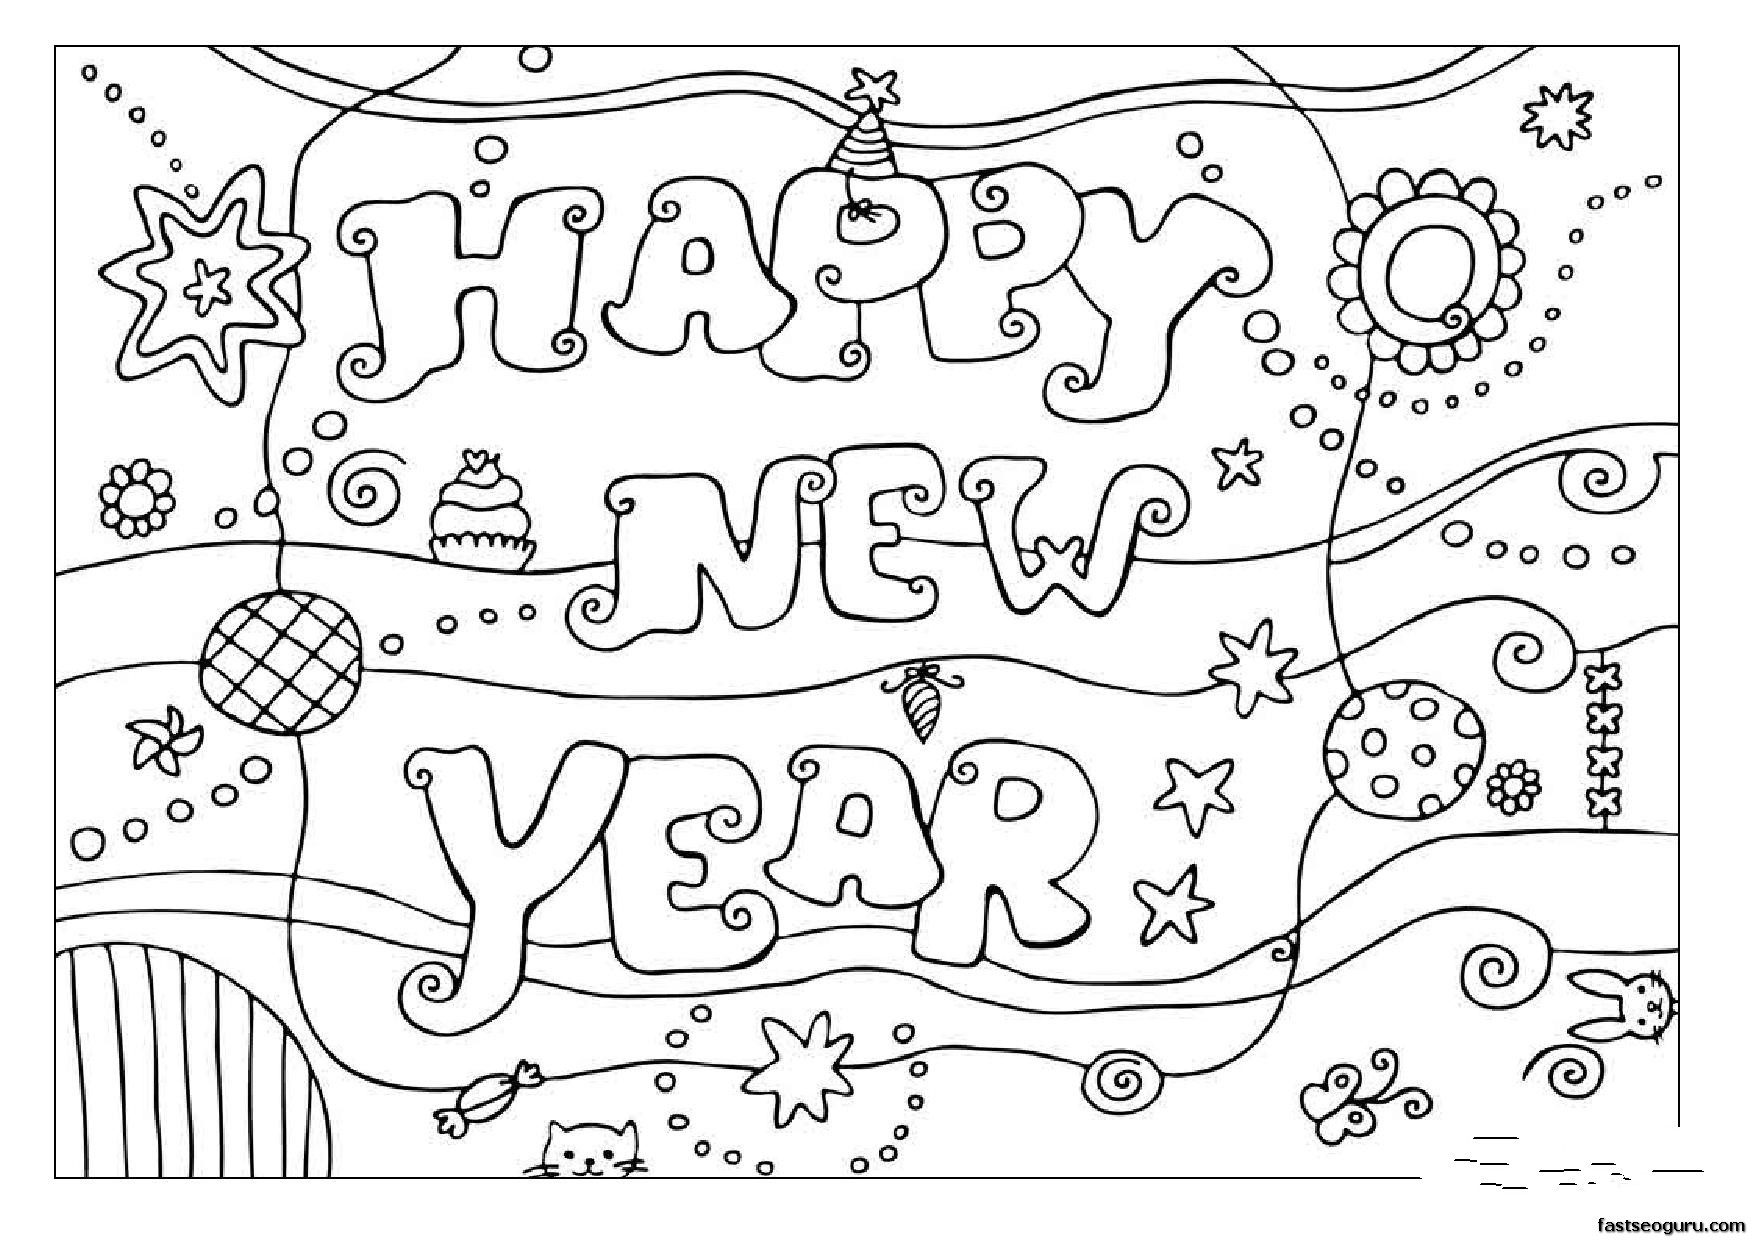 Printable New Years Coloring Pages
 Printabel coloring pages Happy New Year 2013 Printable